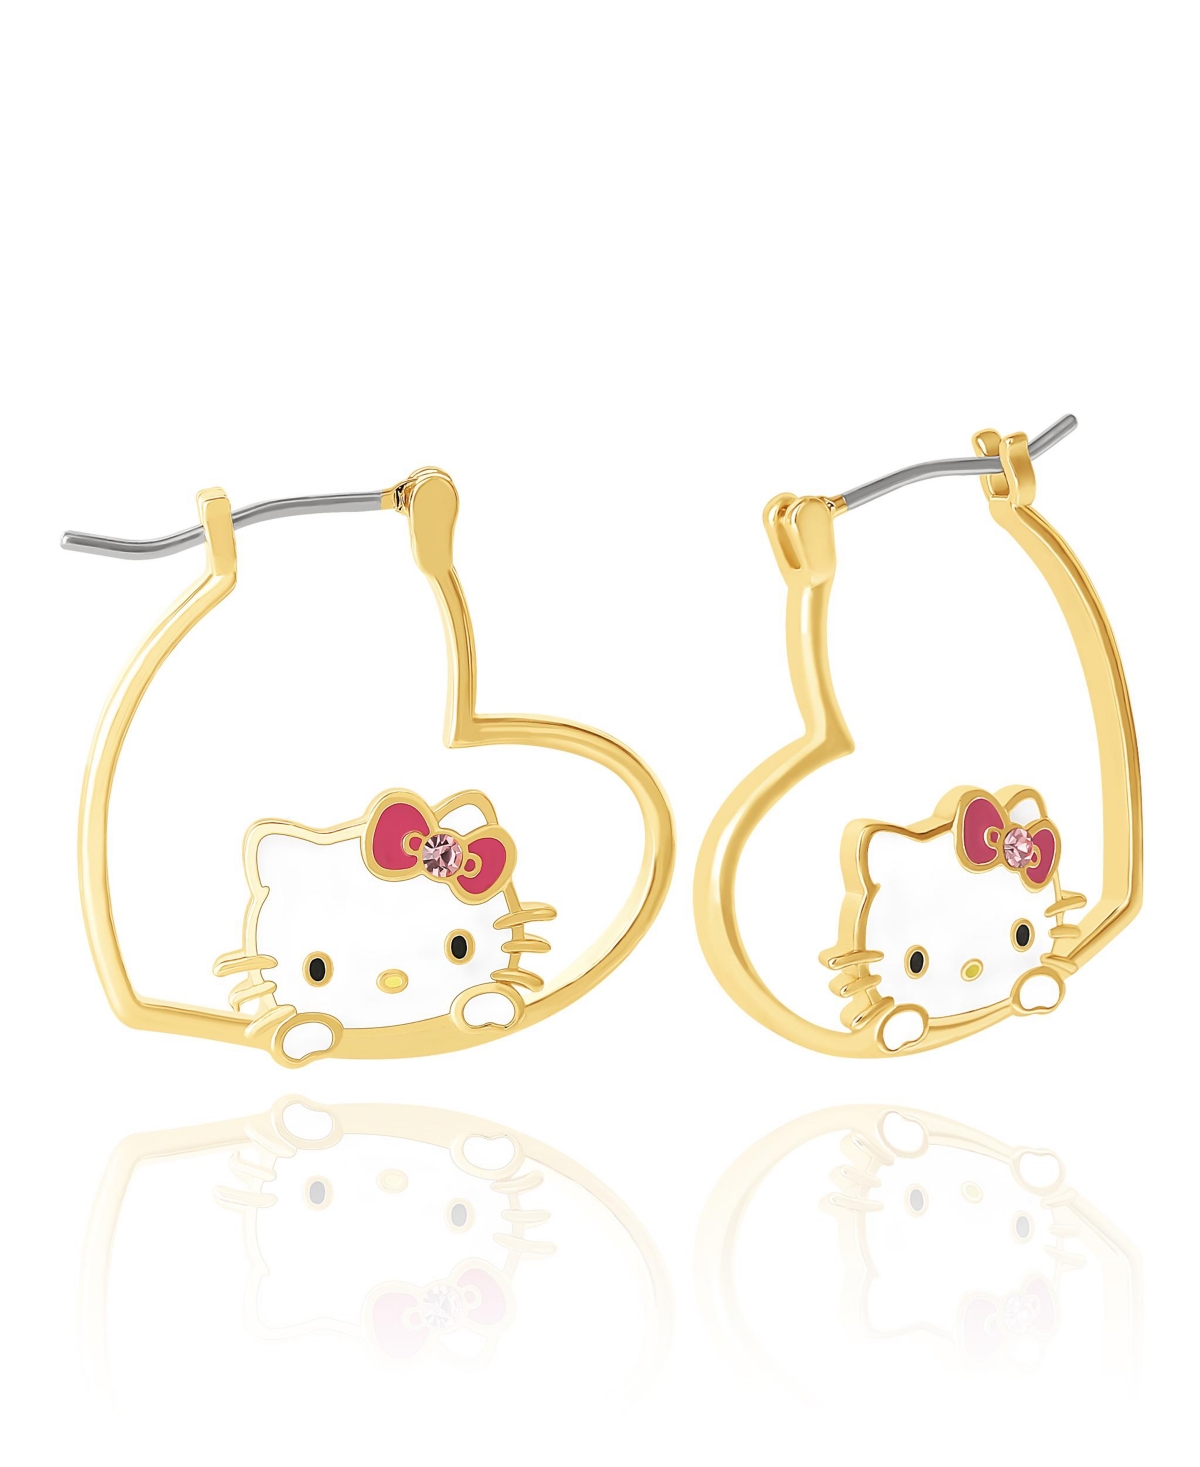 Sanrio Heart Hoop Earrings - Gold tone, white